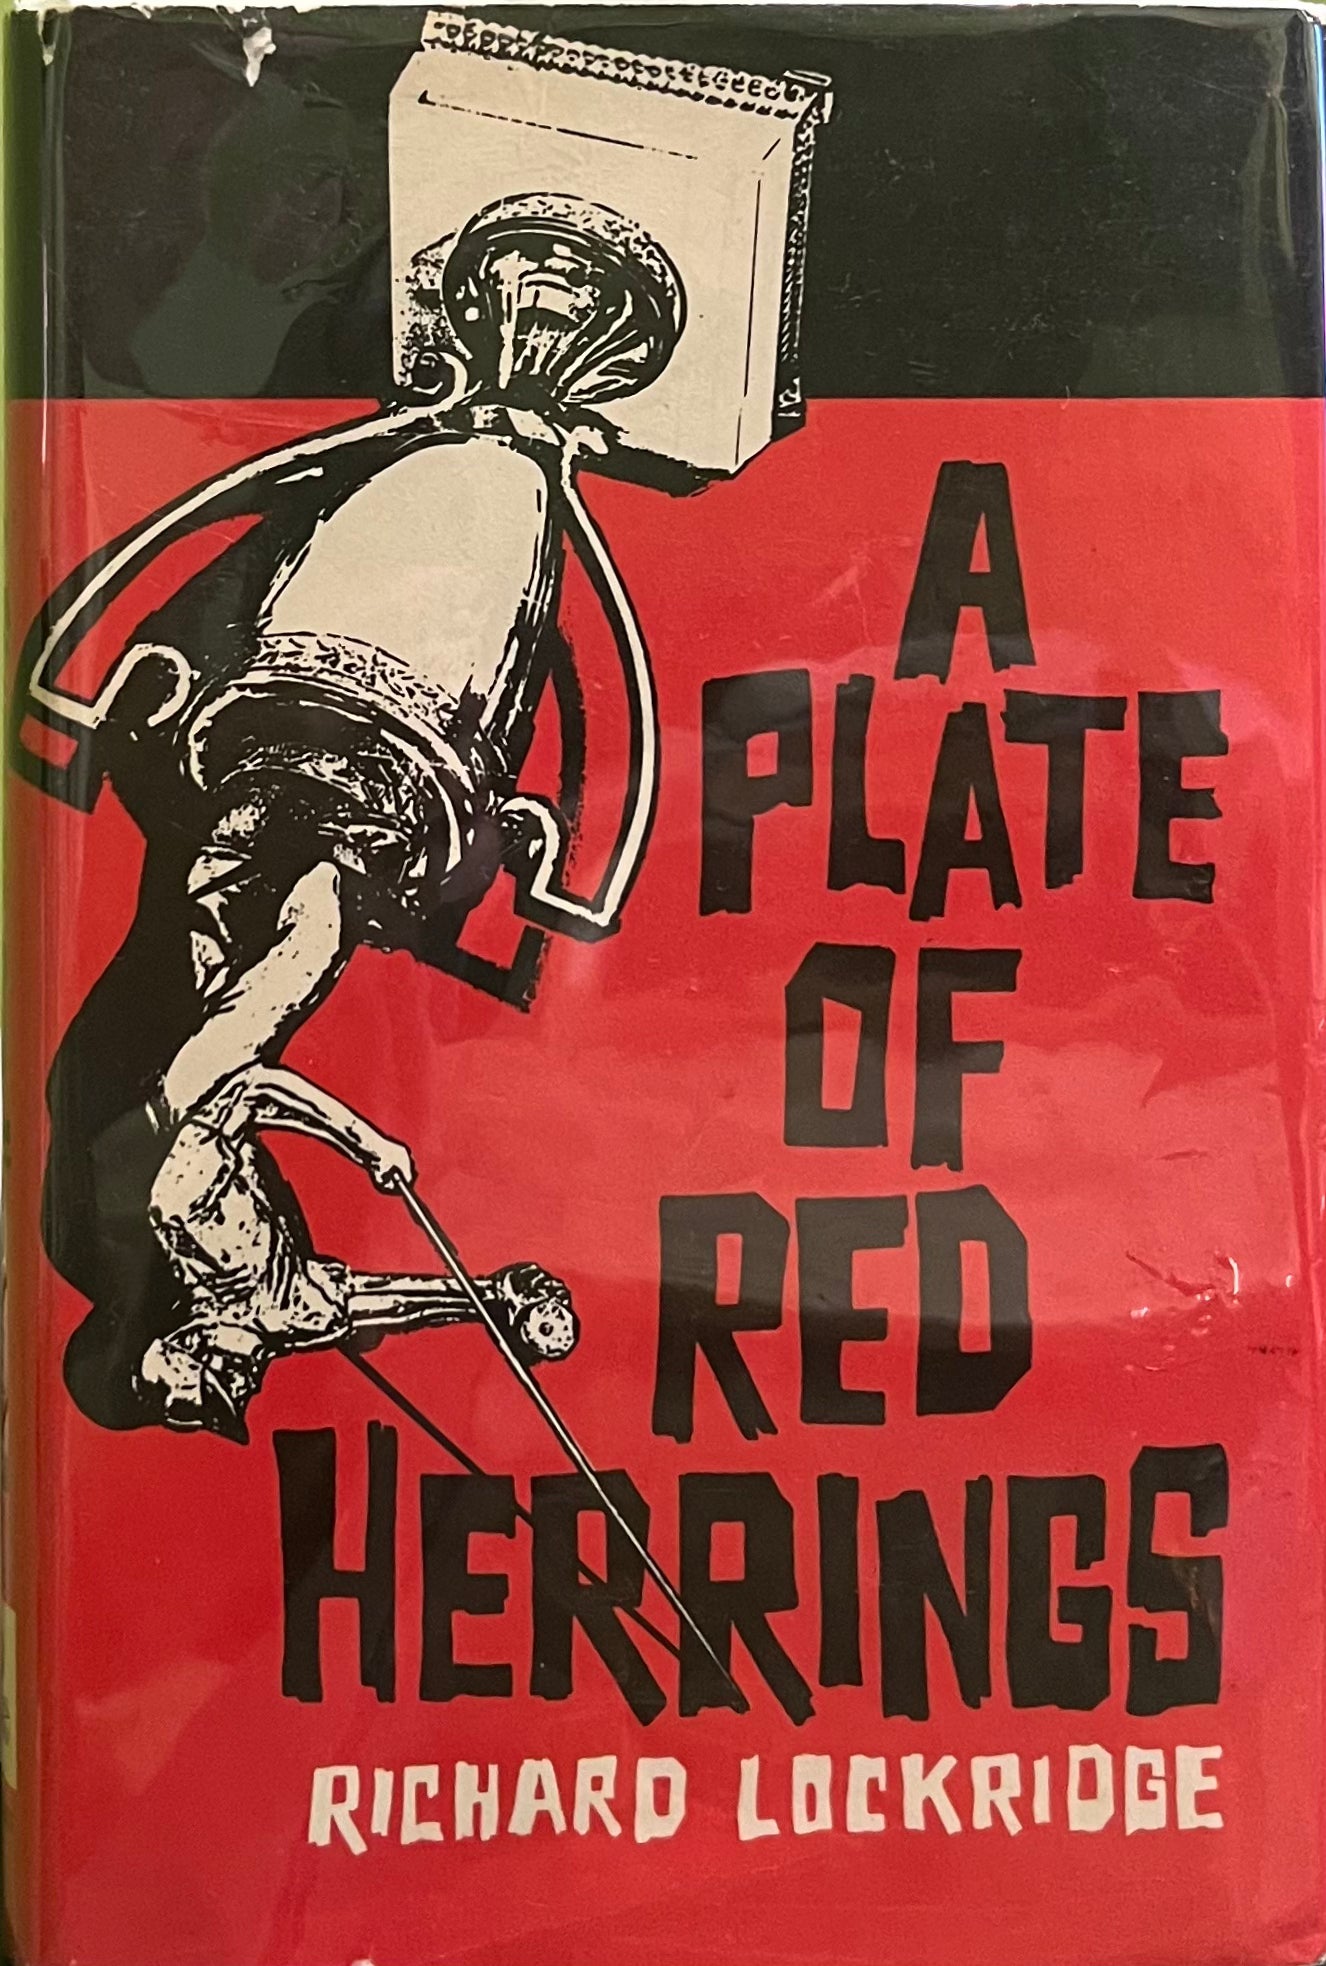 A Plate of Red Herrings, Richard Lockridge